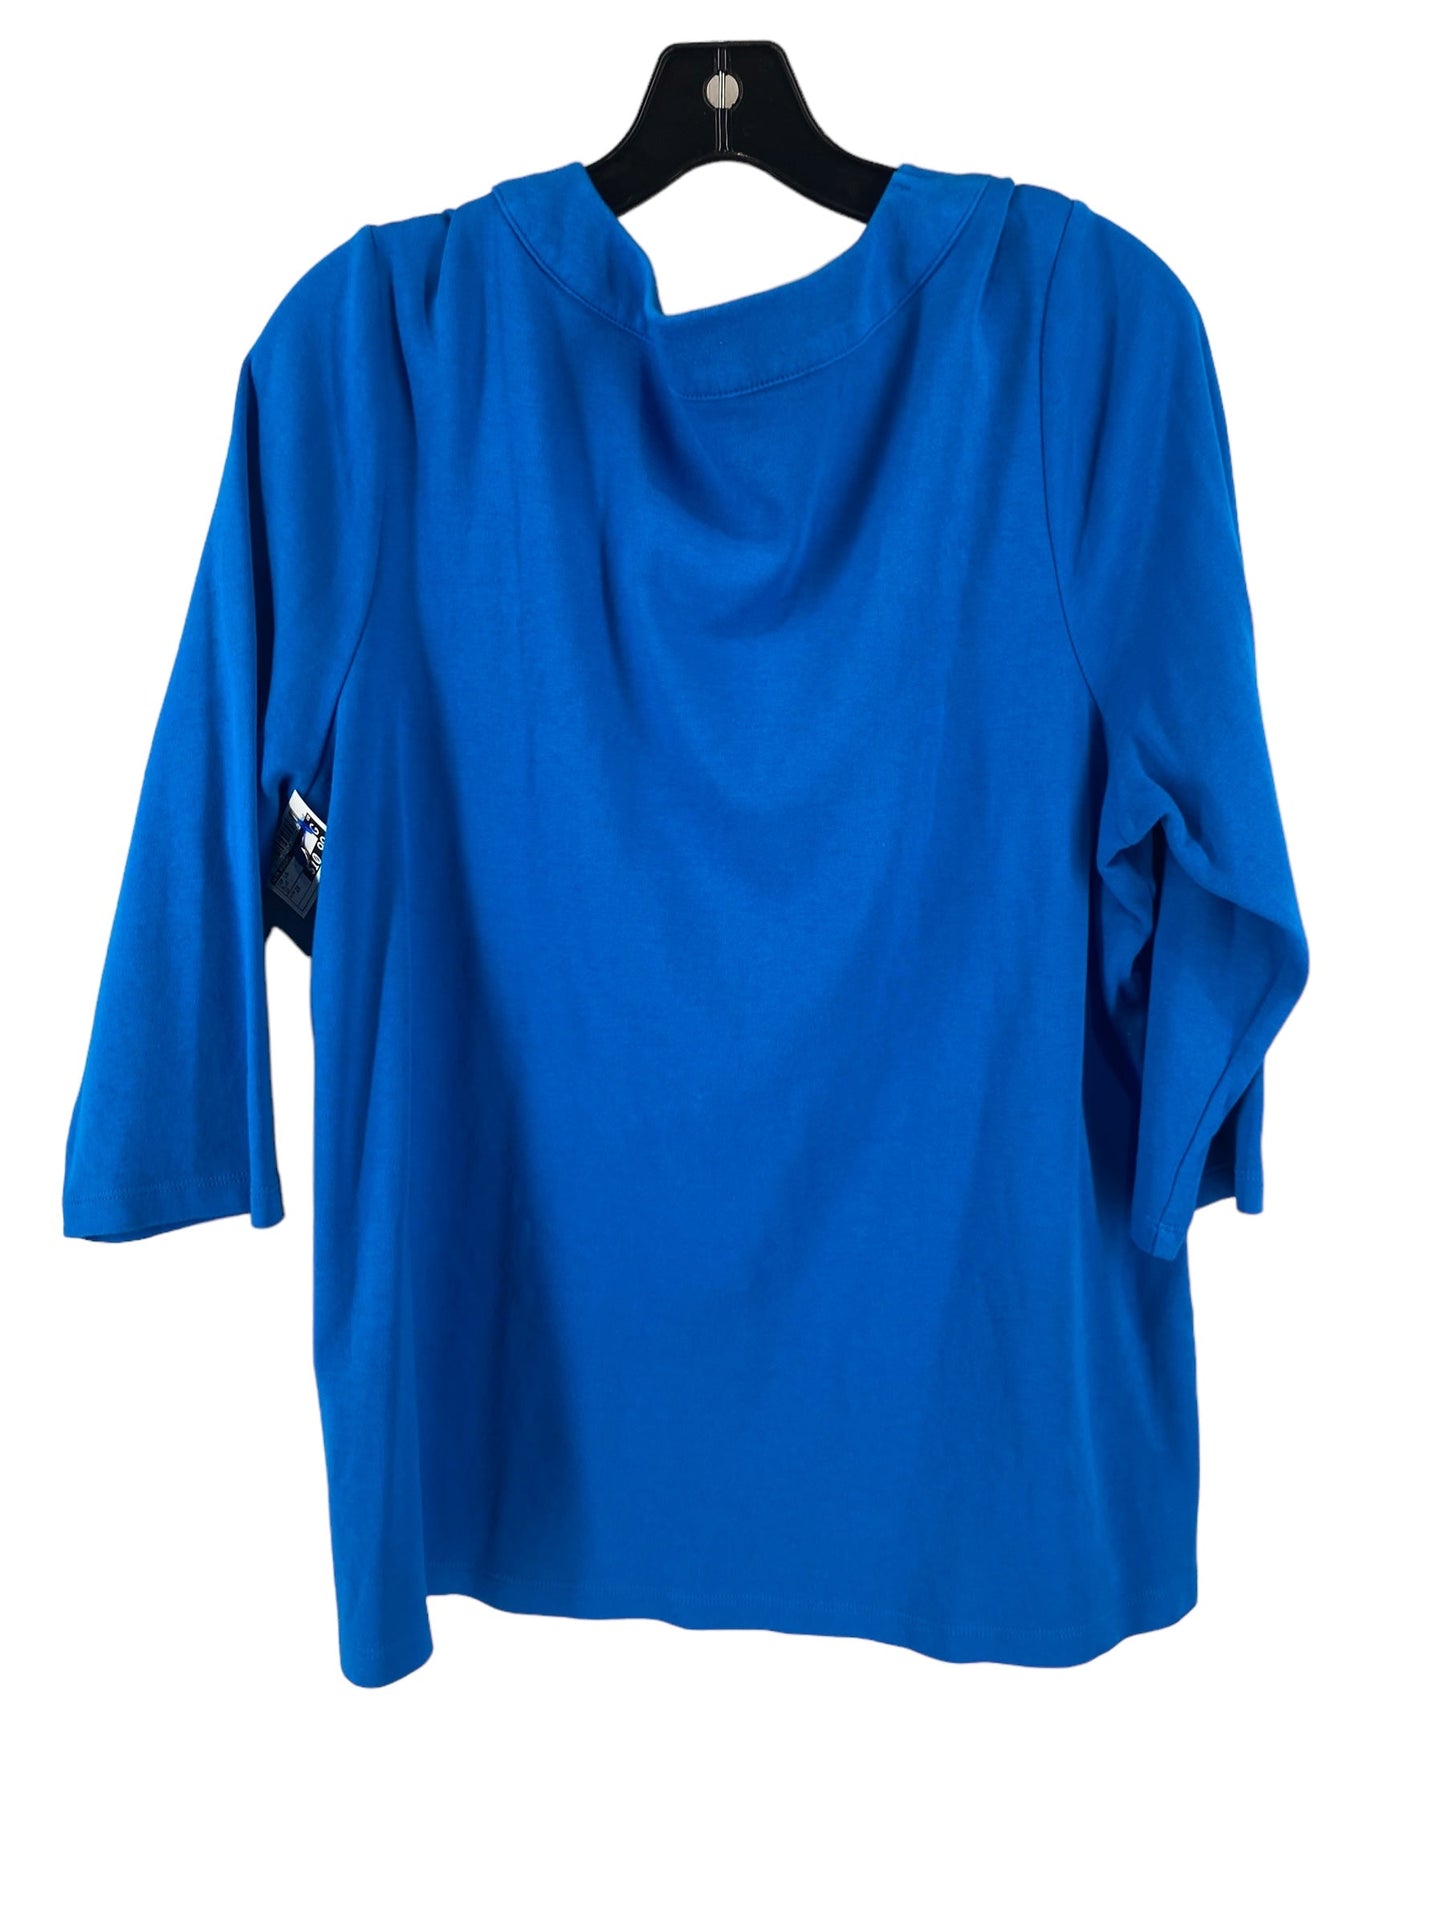 Blue Top Long Sleeve Kim Rogers, Size 2x